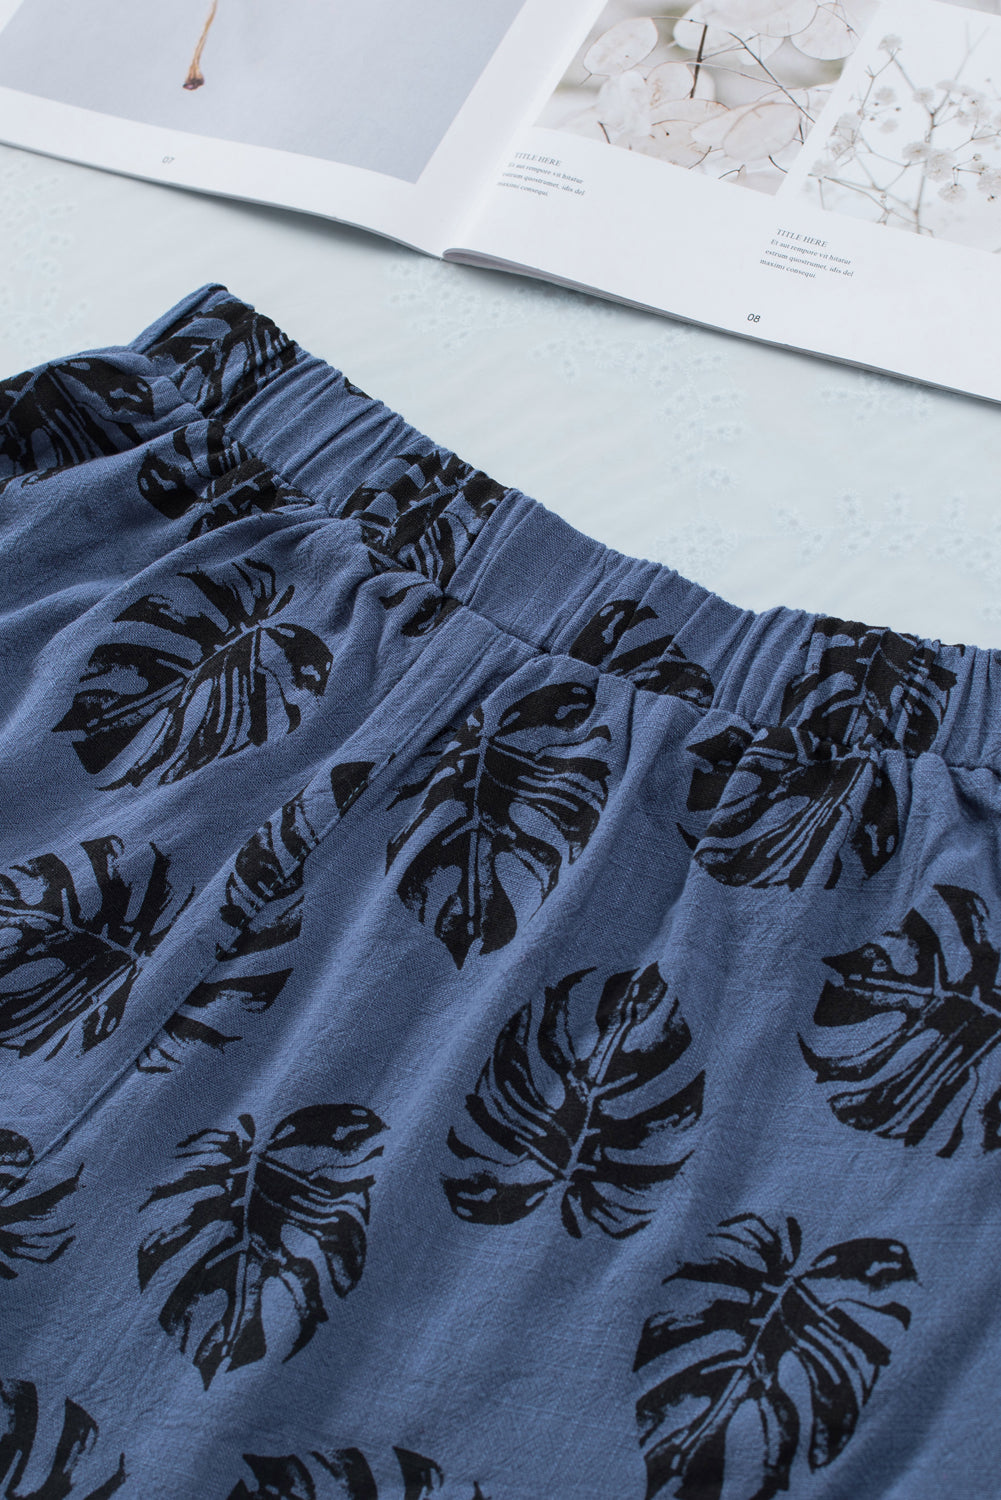 Palm Tree Leaves Print Elastic Waist Shorts With Pocket